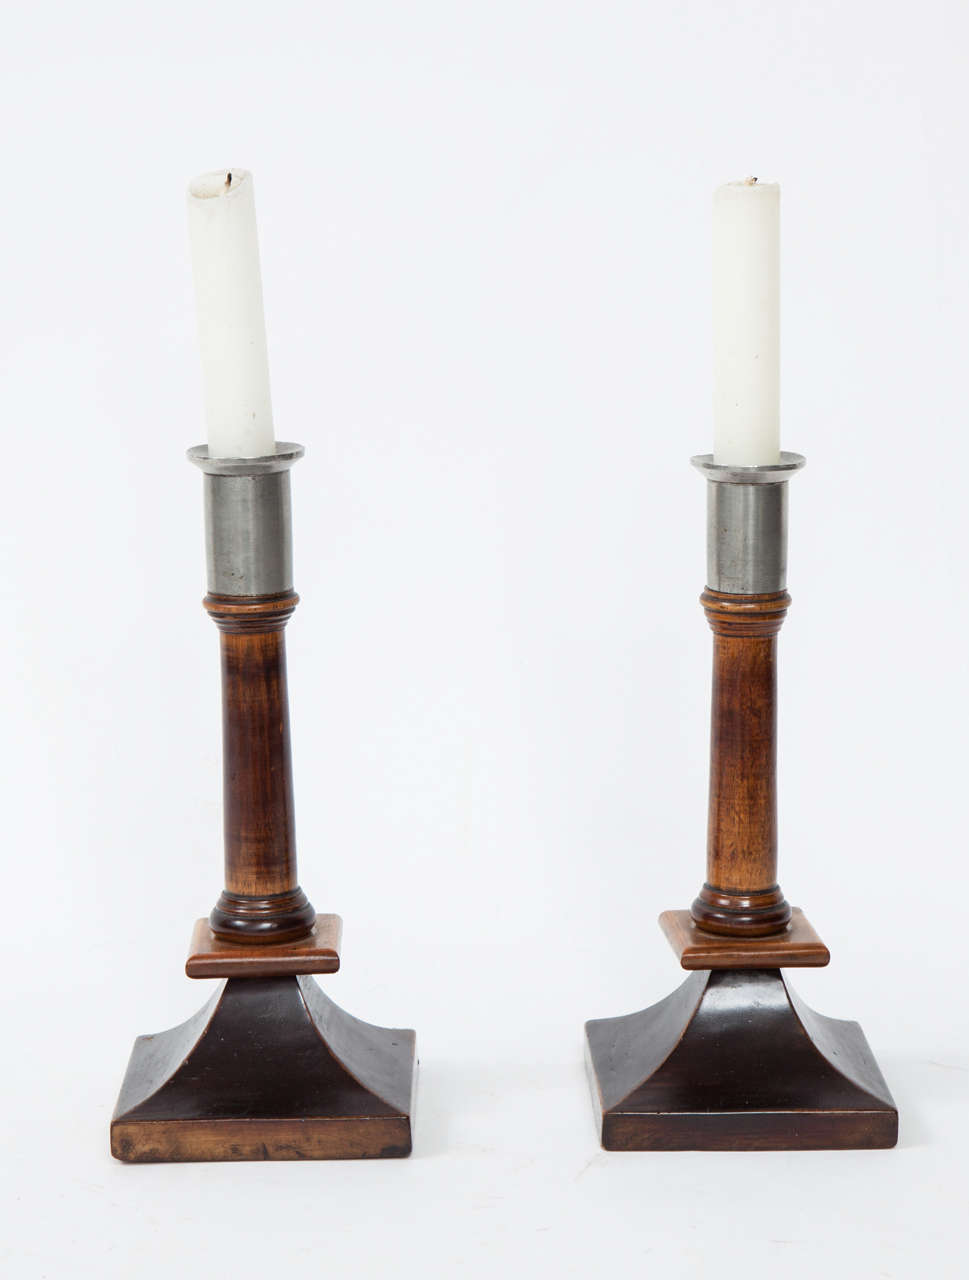 Neoclassical Revival Pair of Swedish Candlesticks